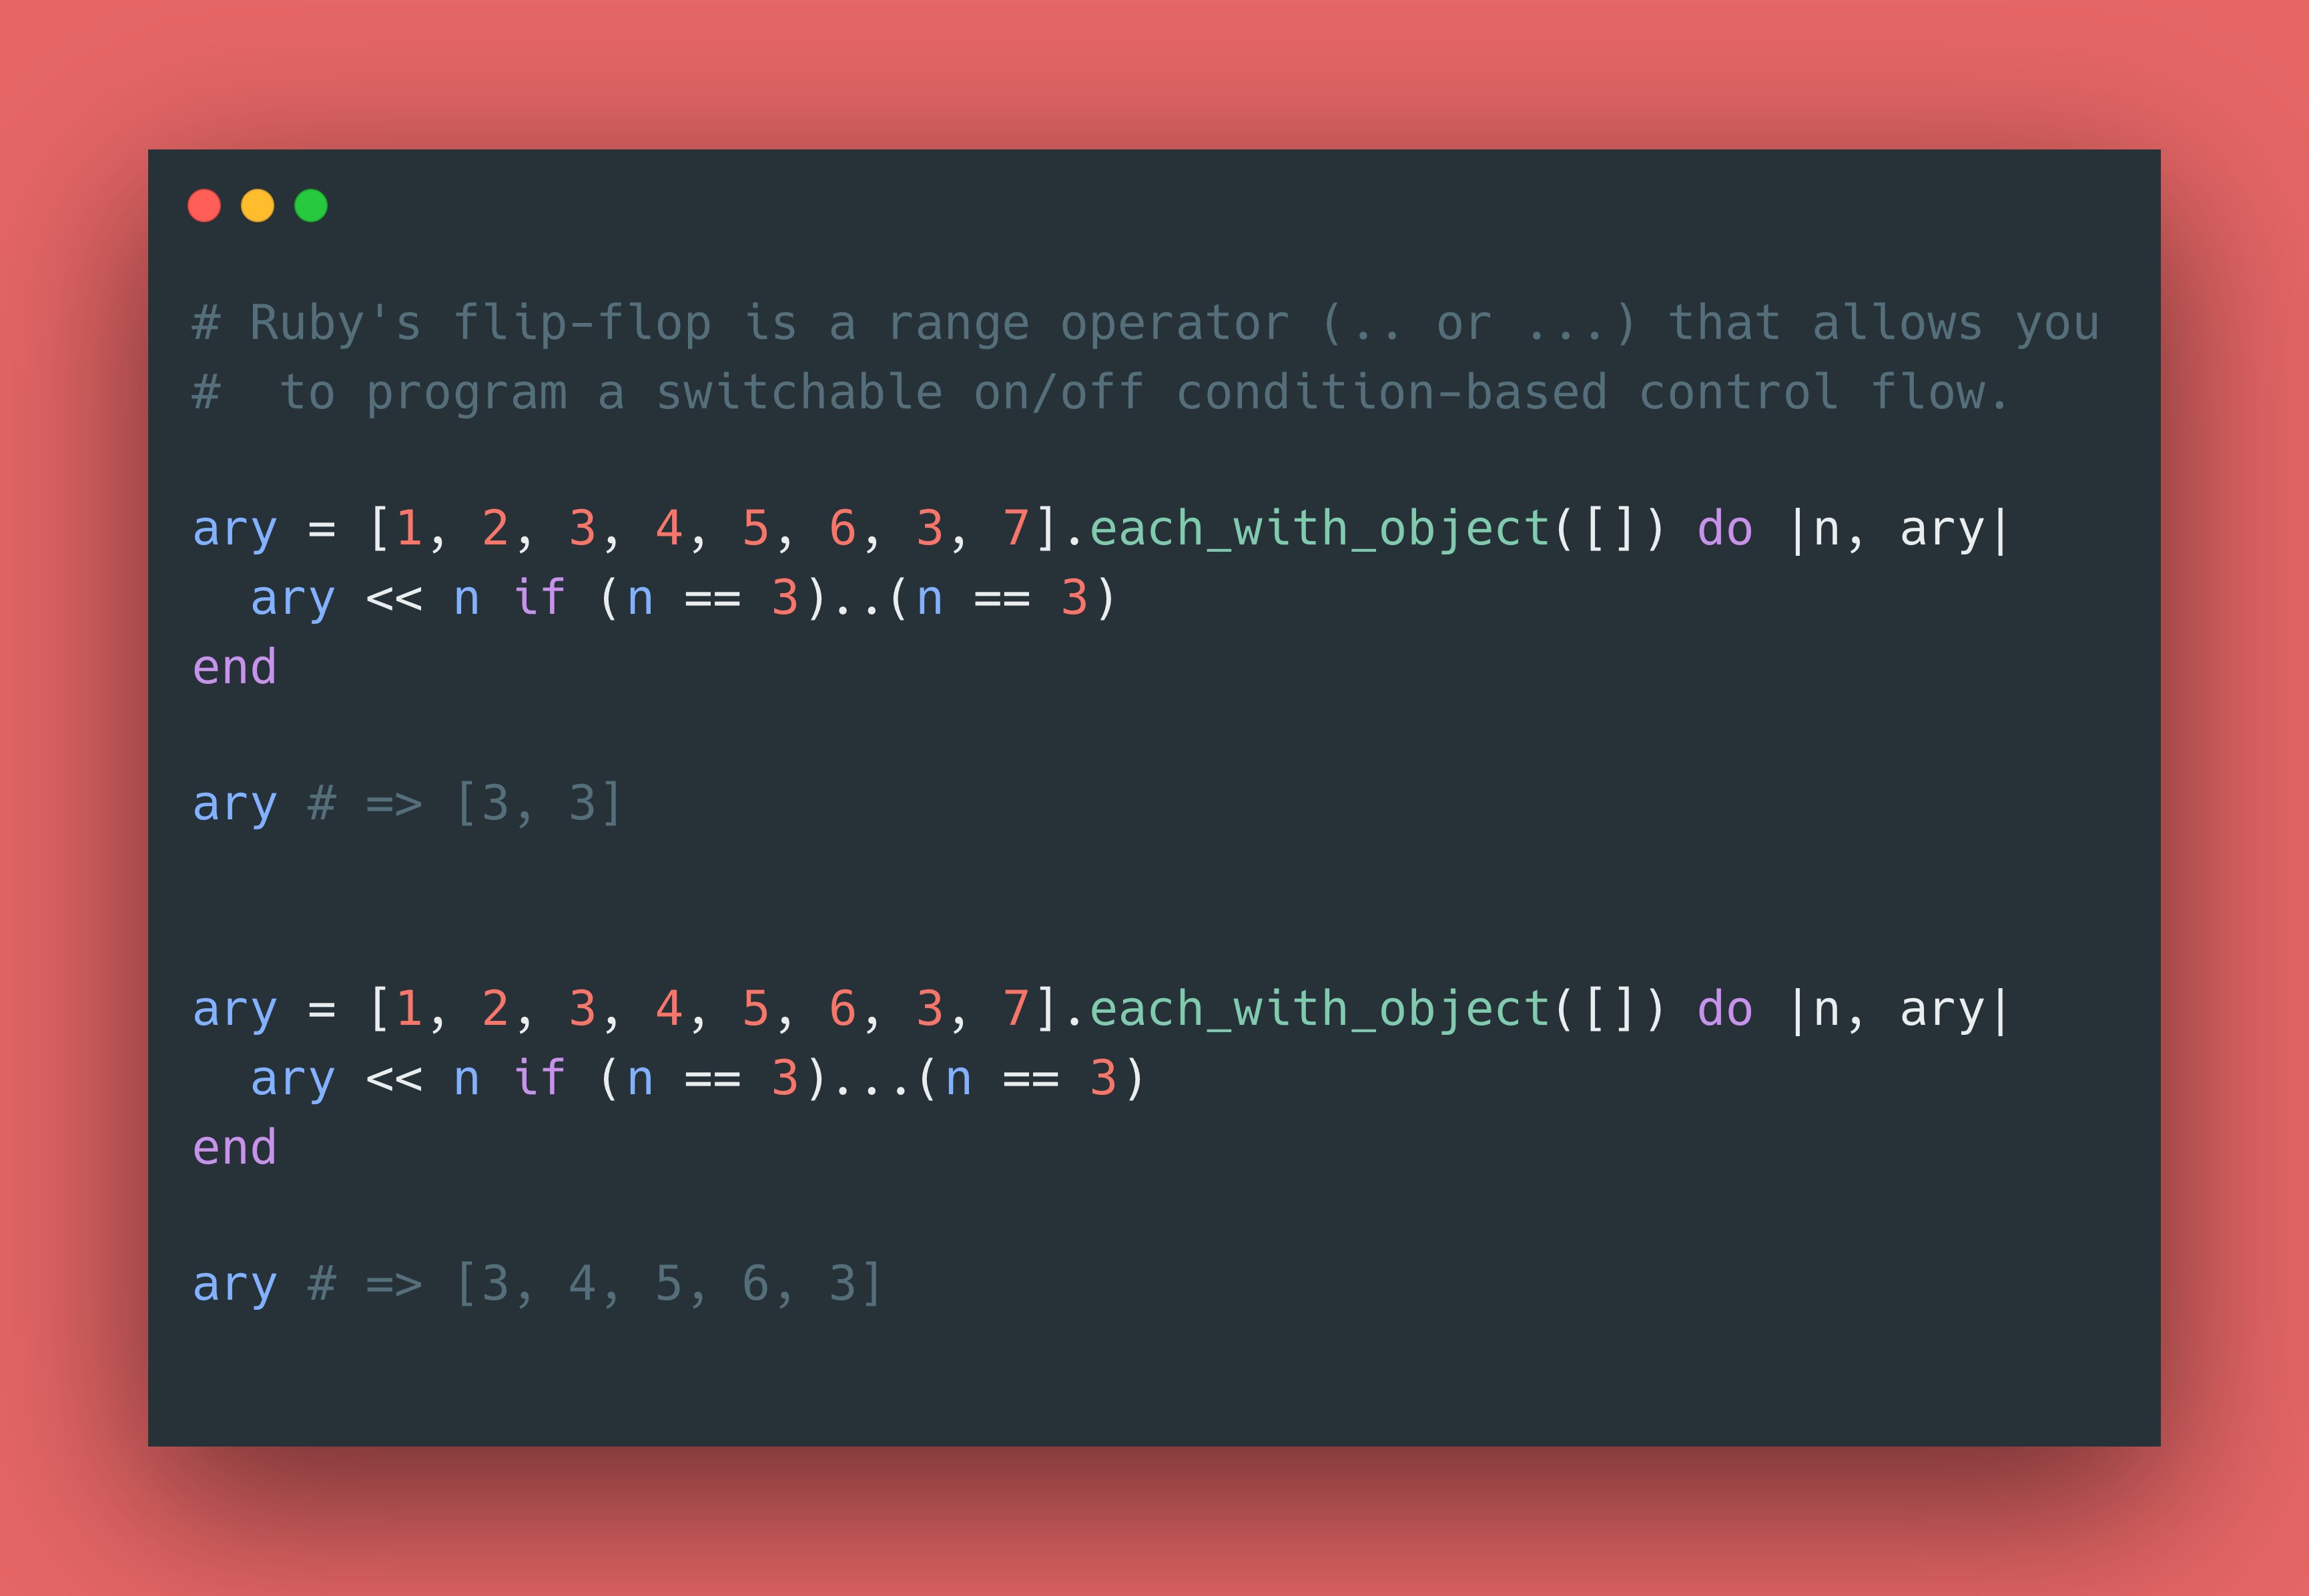 Ruby's flip/flop operators